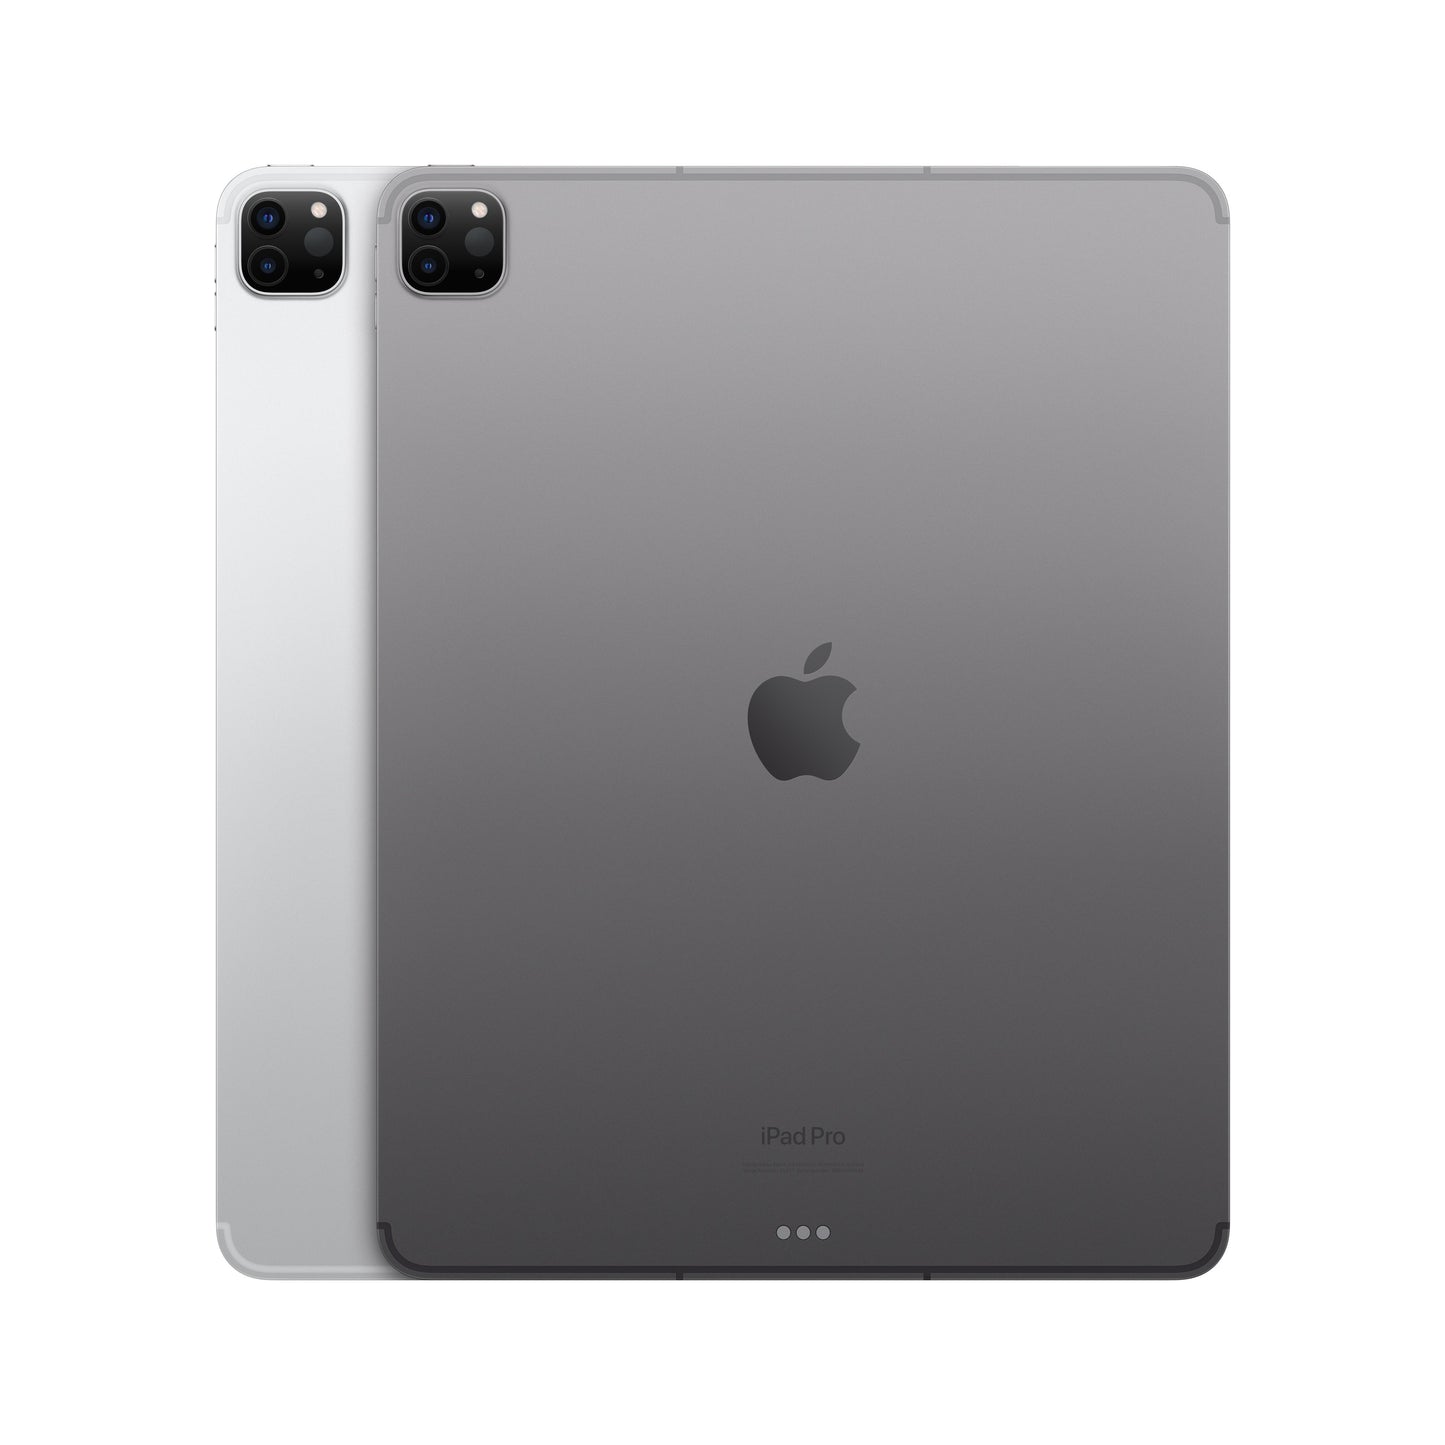 2022 iPad Pro مقاس 12.9 إنش Wi-Fi 128GB + شريحة  - رمادي (الجيل السادس)